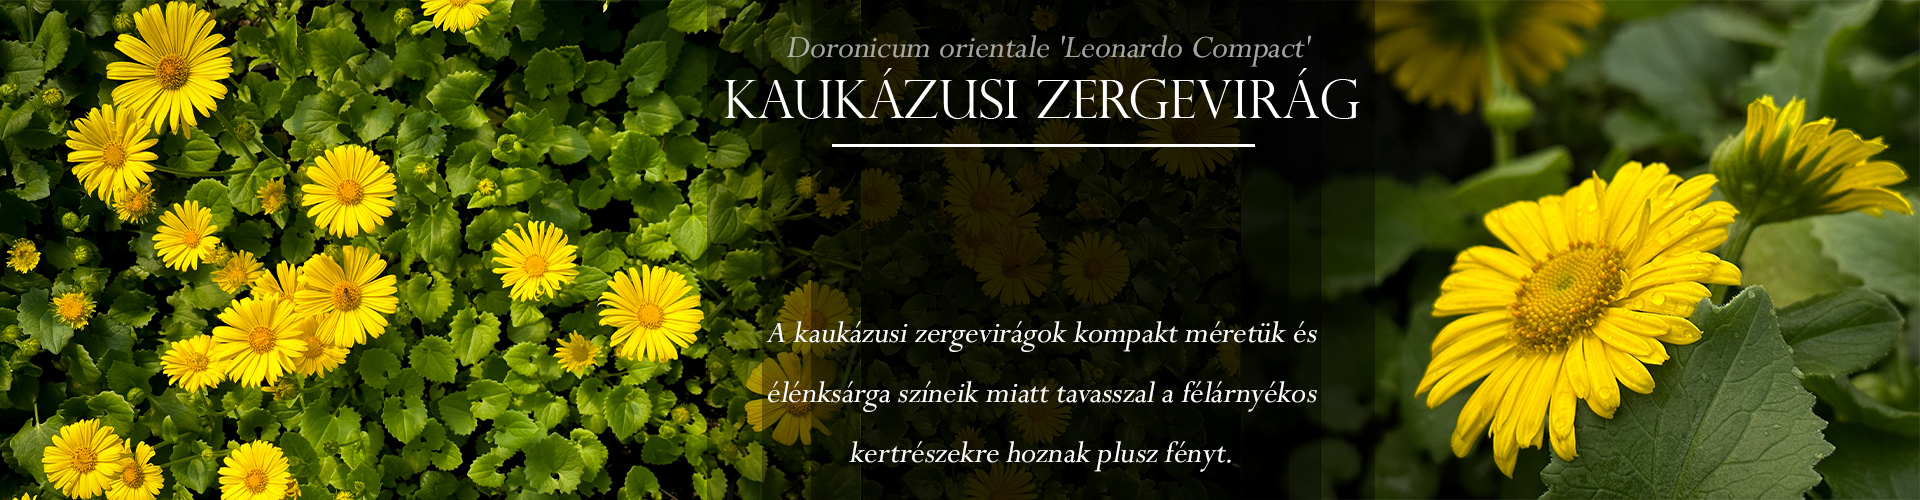 Kaukázusi zergevirág - Doronicum orientale 'Leonardo Compact'